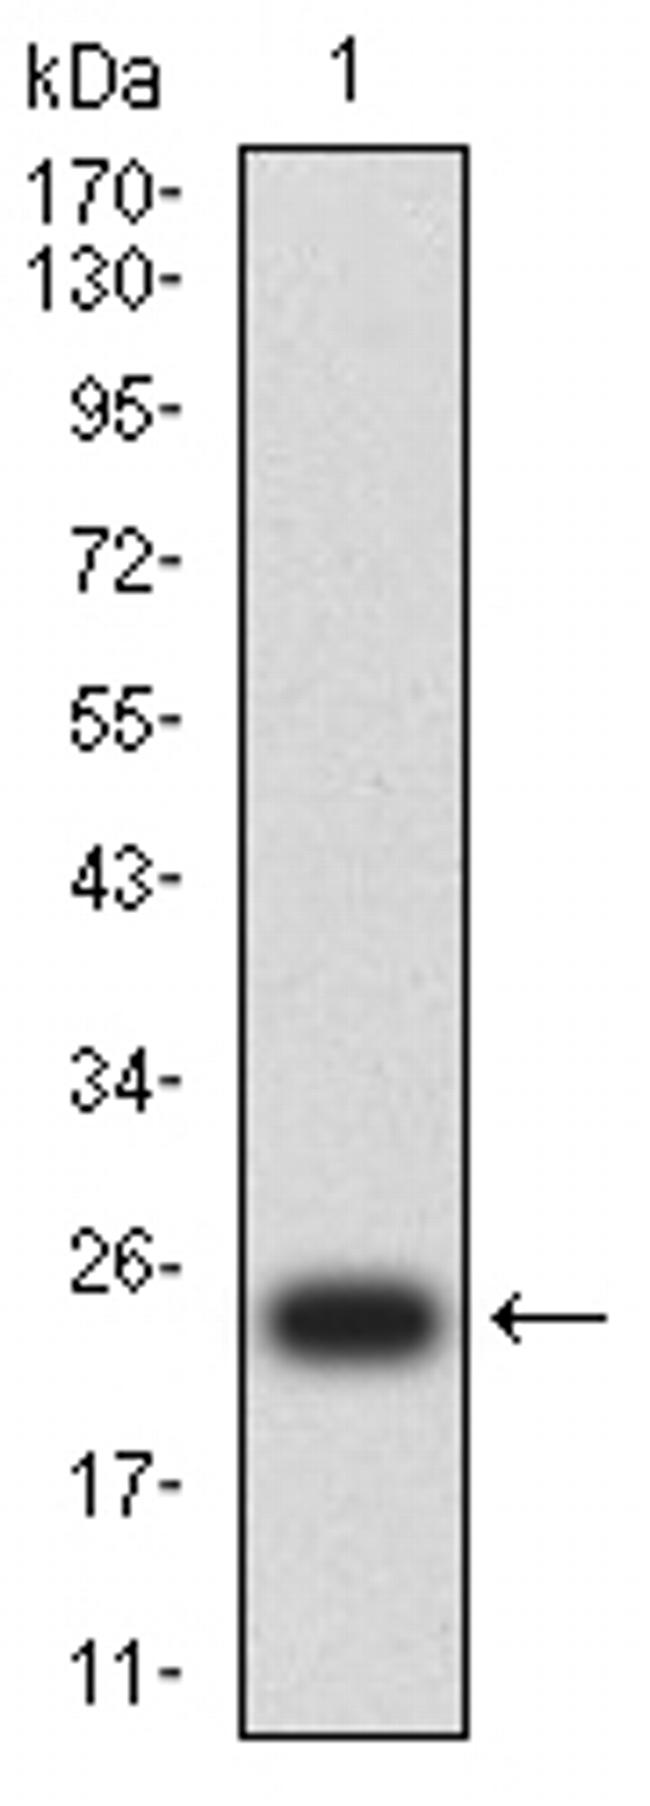 p57 Kip2 Antibody in Western Blot (WB)